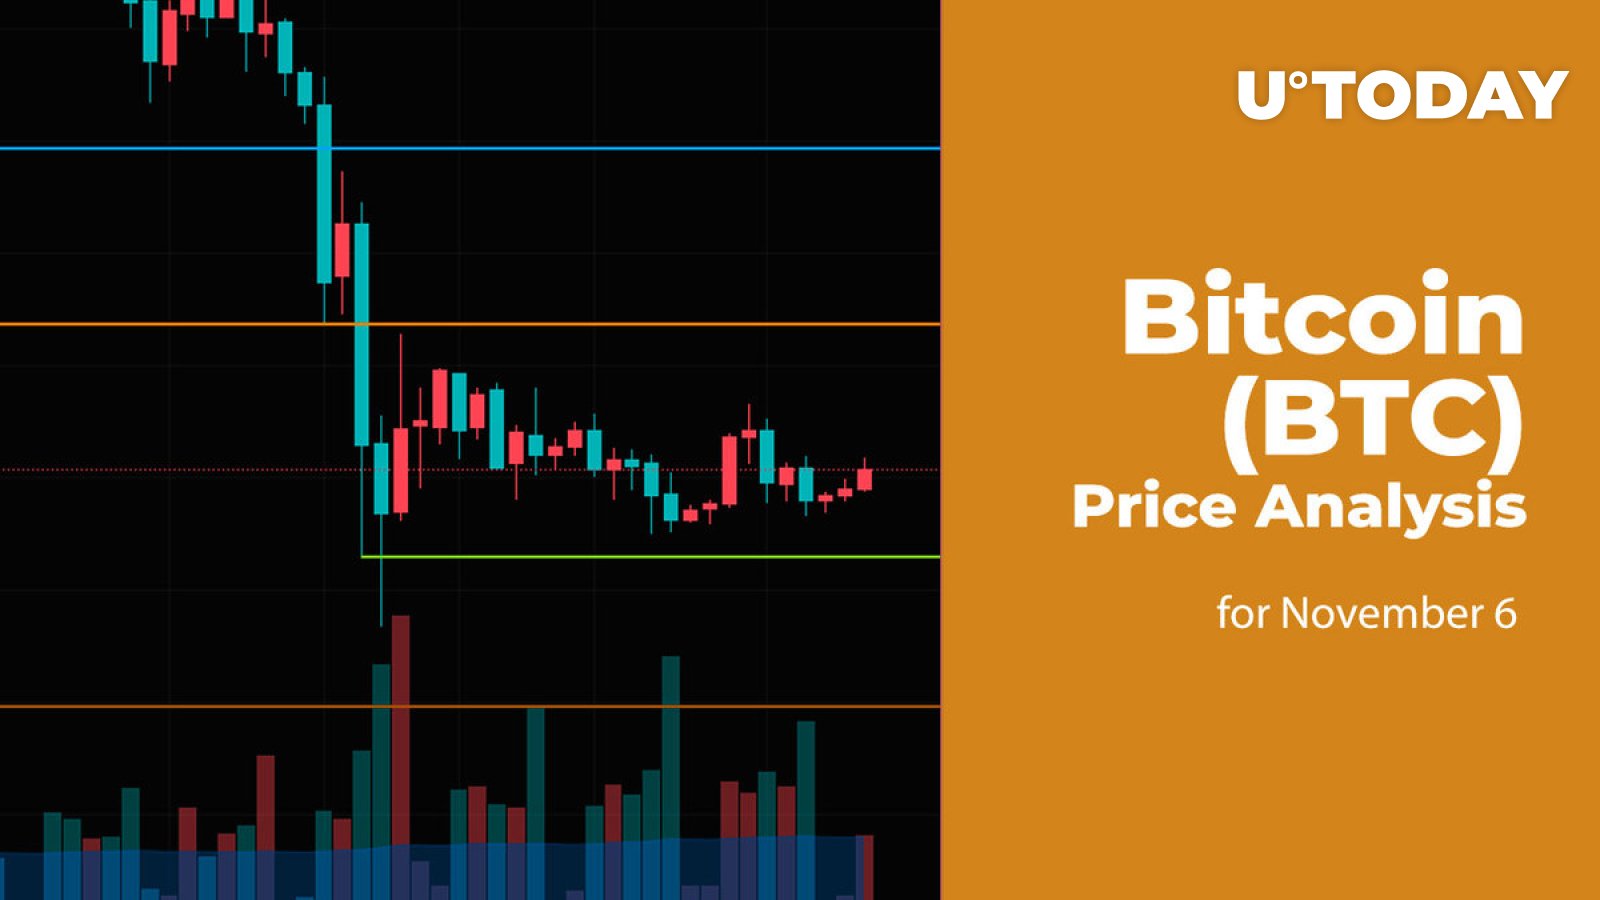 Bitcoin (BTC) Price Analysis for November 6